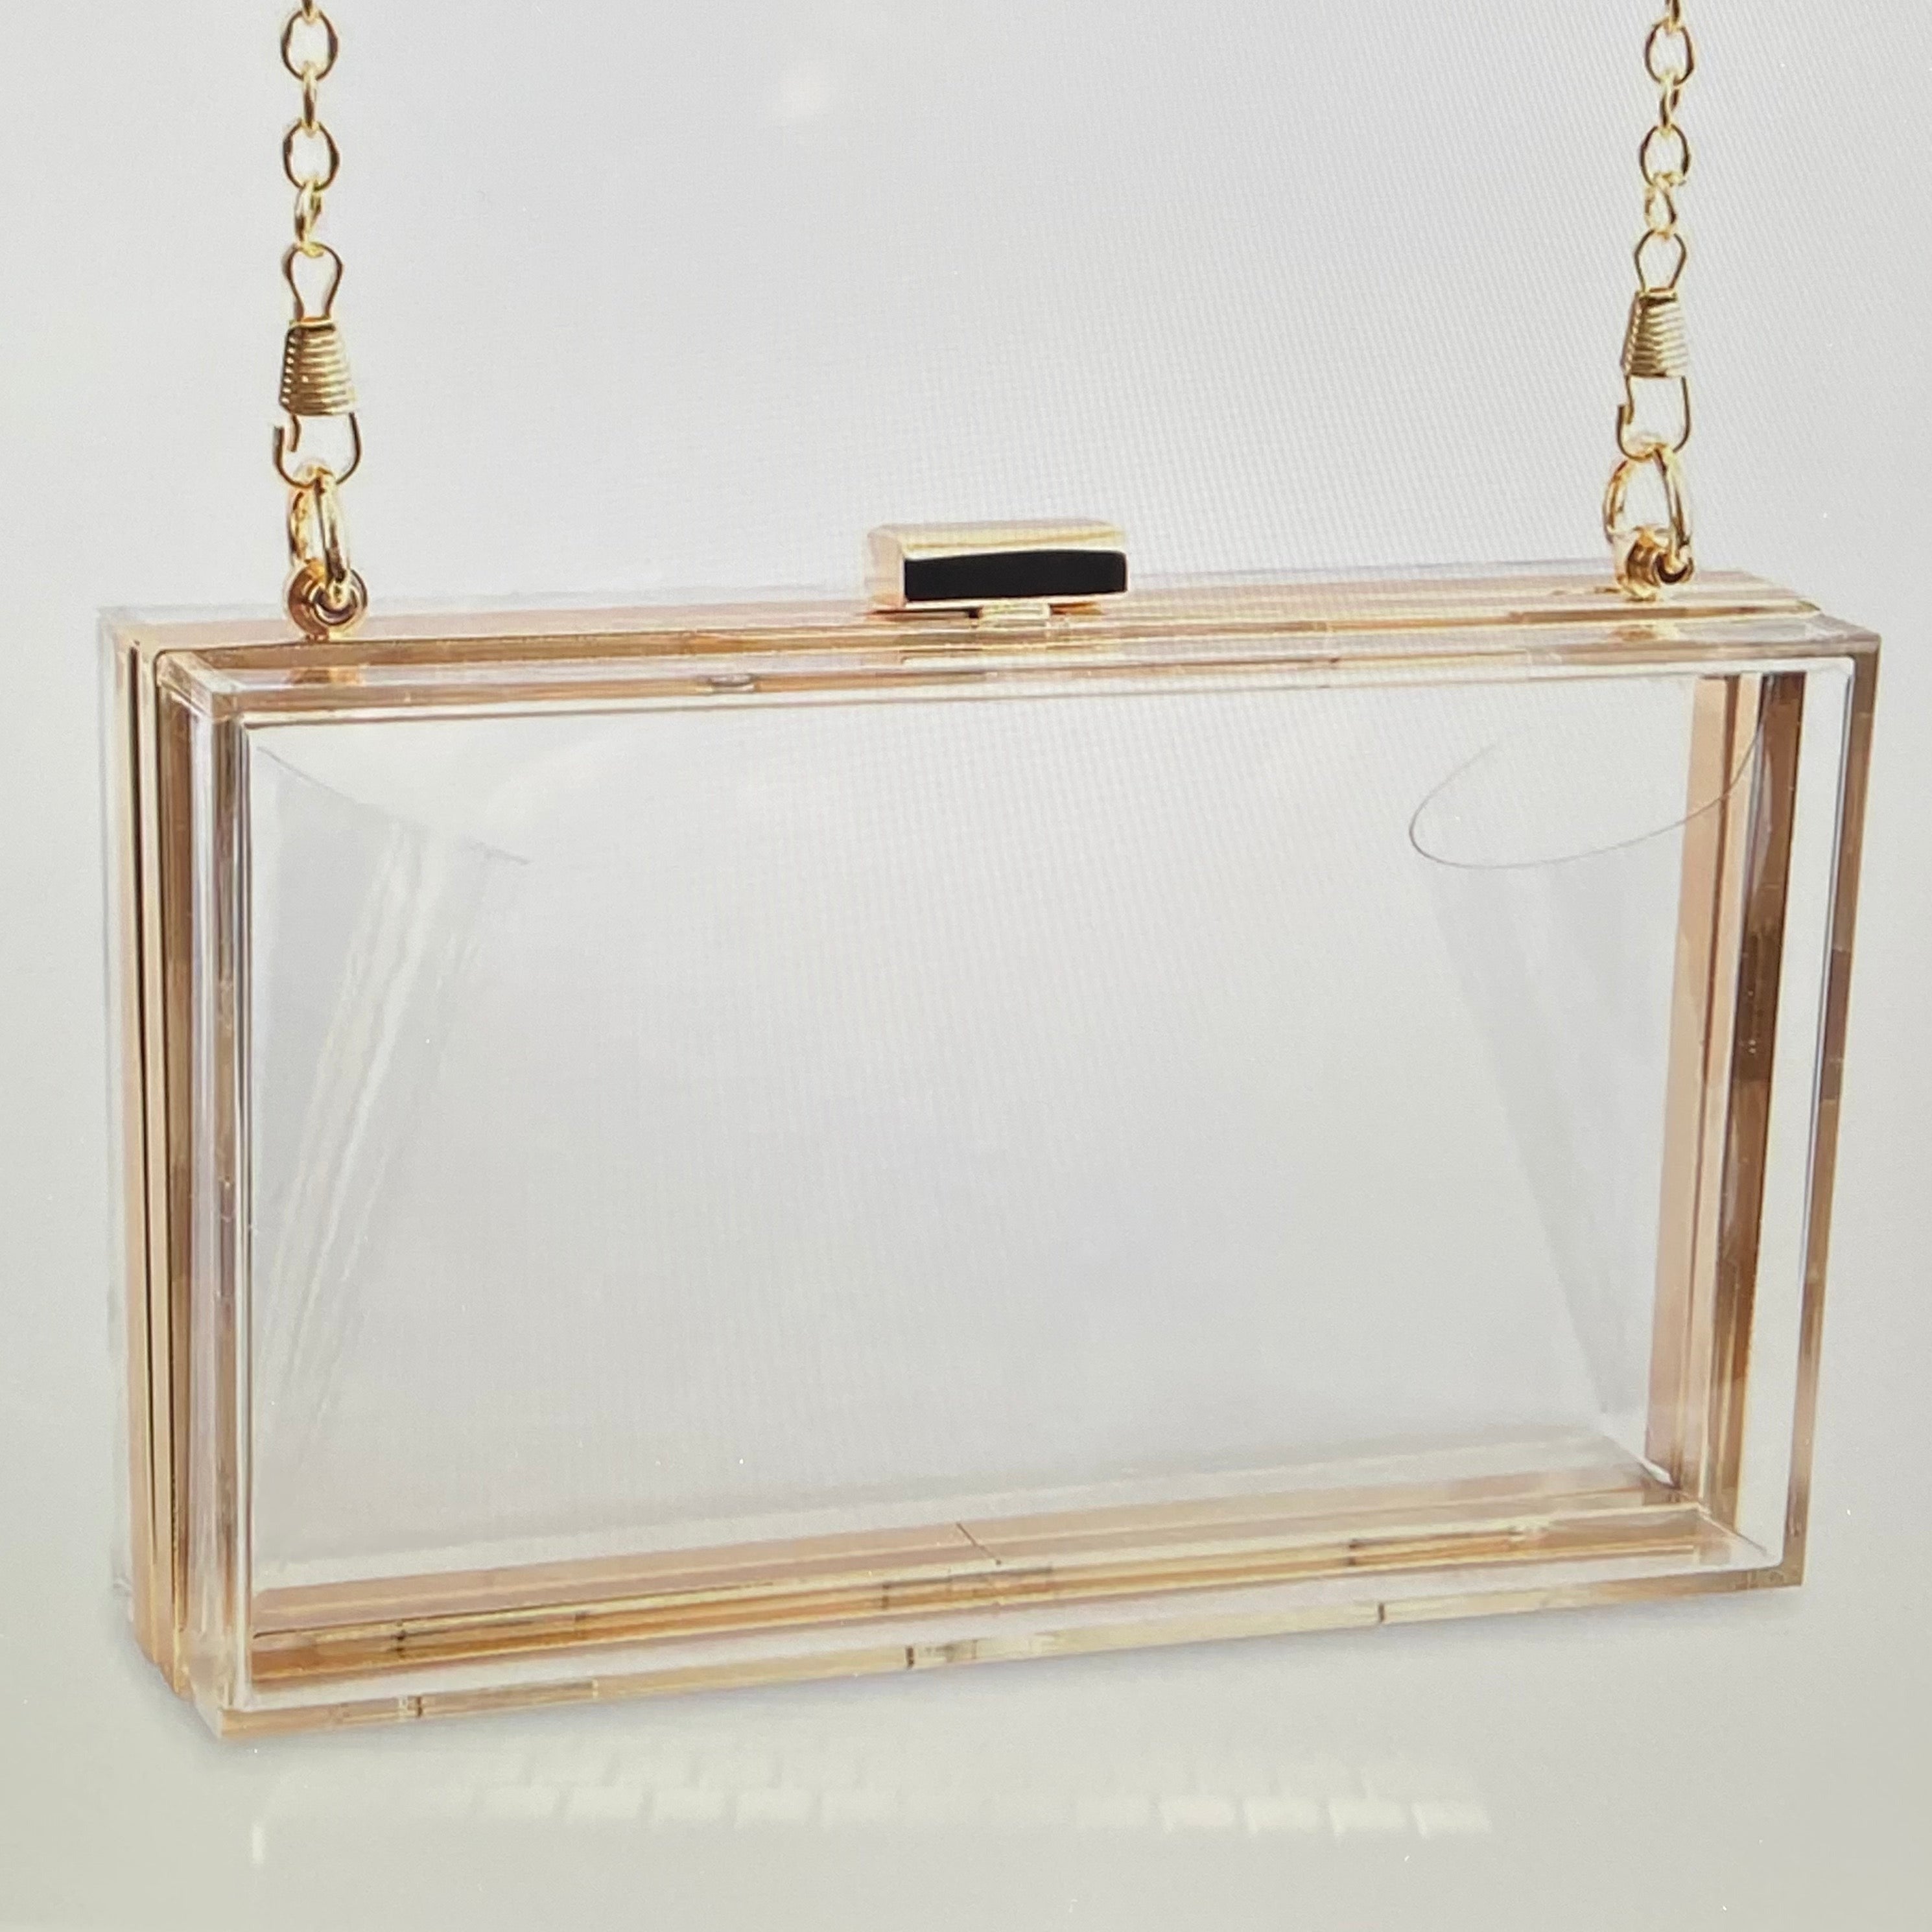 Evening luxury crystal clutch purse handbag Bridal Party Rose Gold Gray  Black 5 | eBay